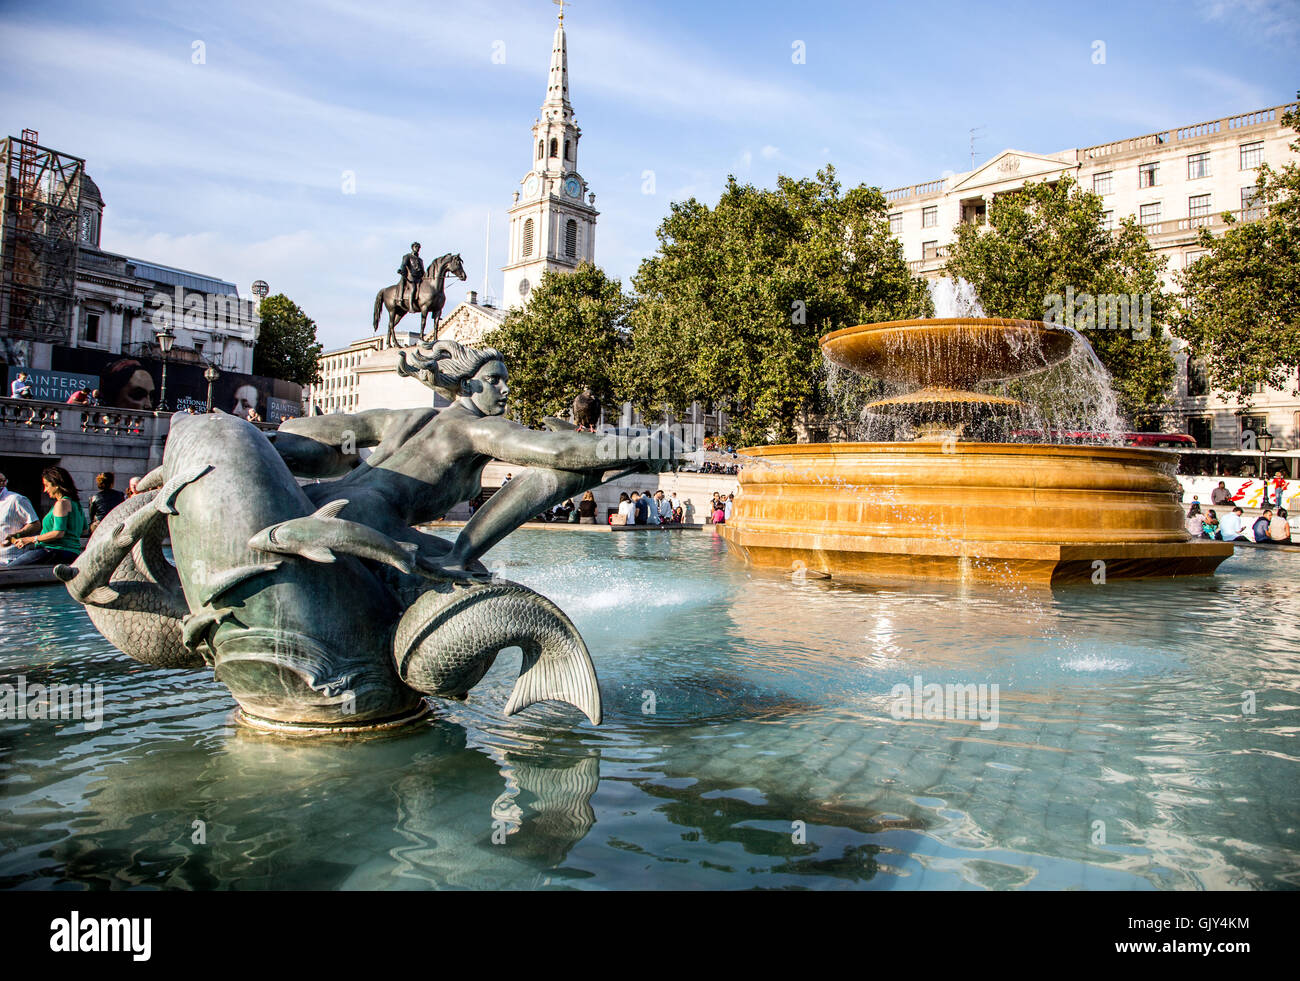 Sculpture and Fountains Trafalgar Square London UK Stock Photo - Alamy